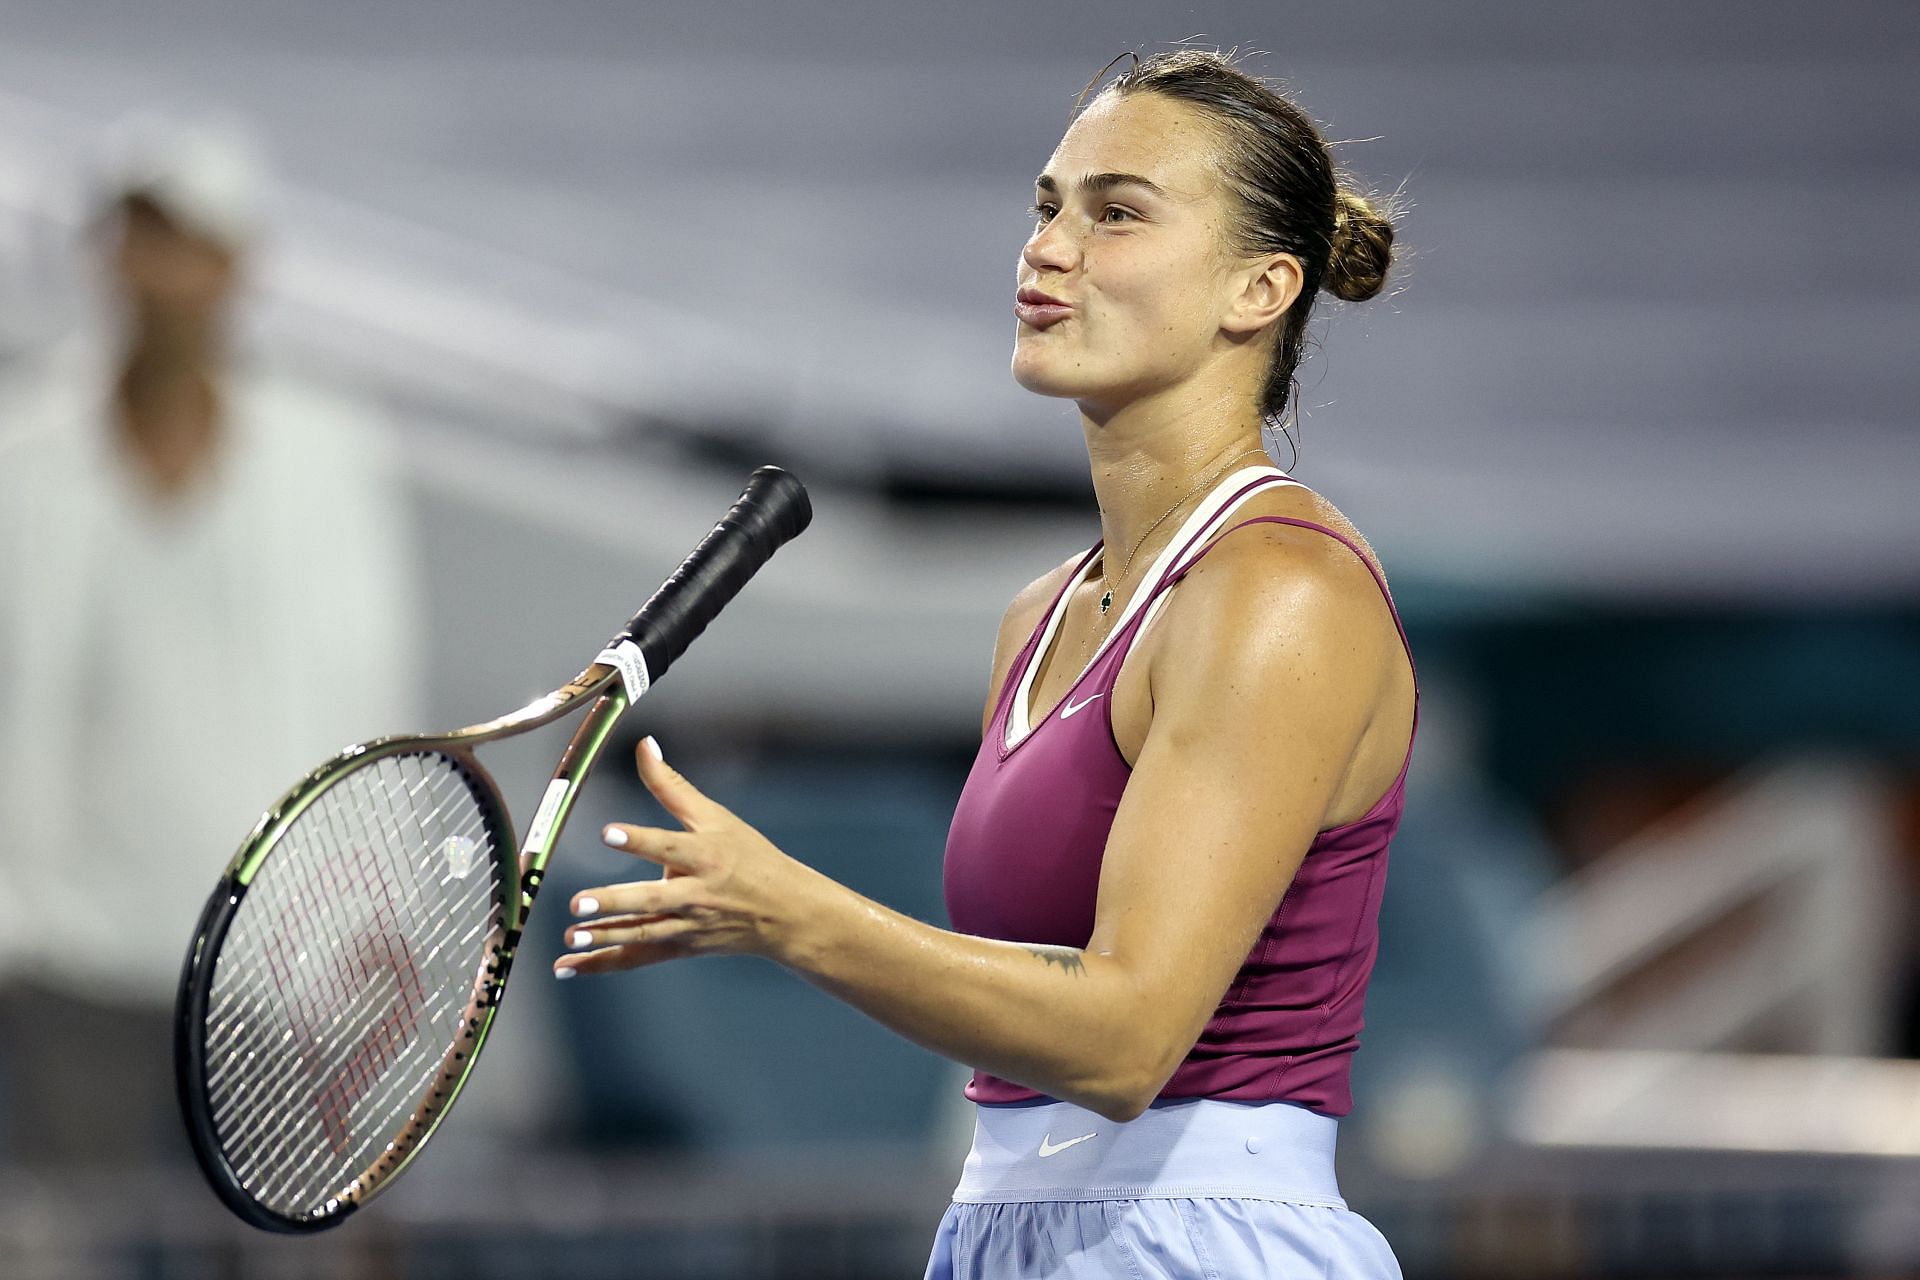 Aryna Sabalenka at the ongoing Miami Open.